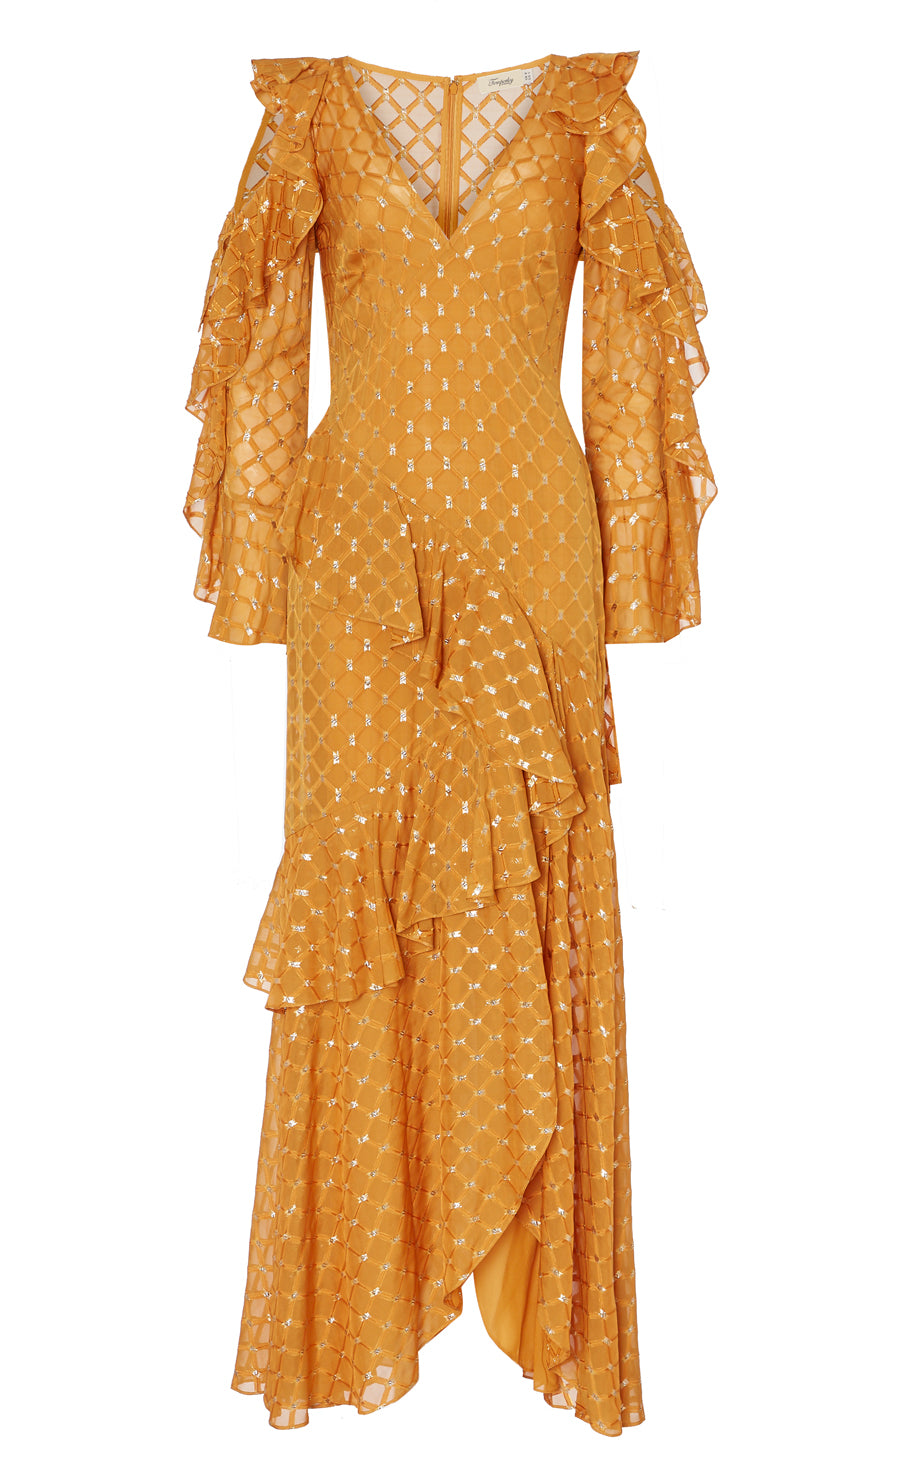 Angelico Ruffle Dress - Amber Gold